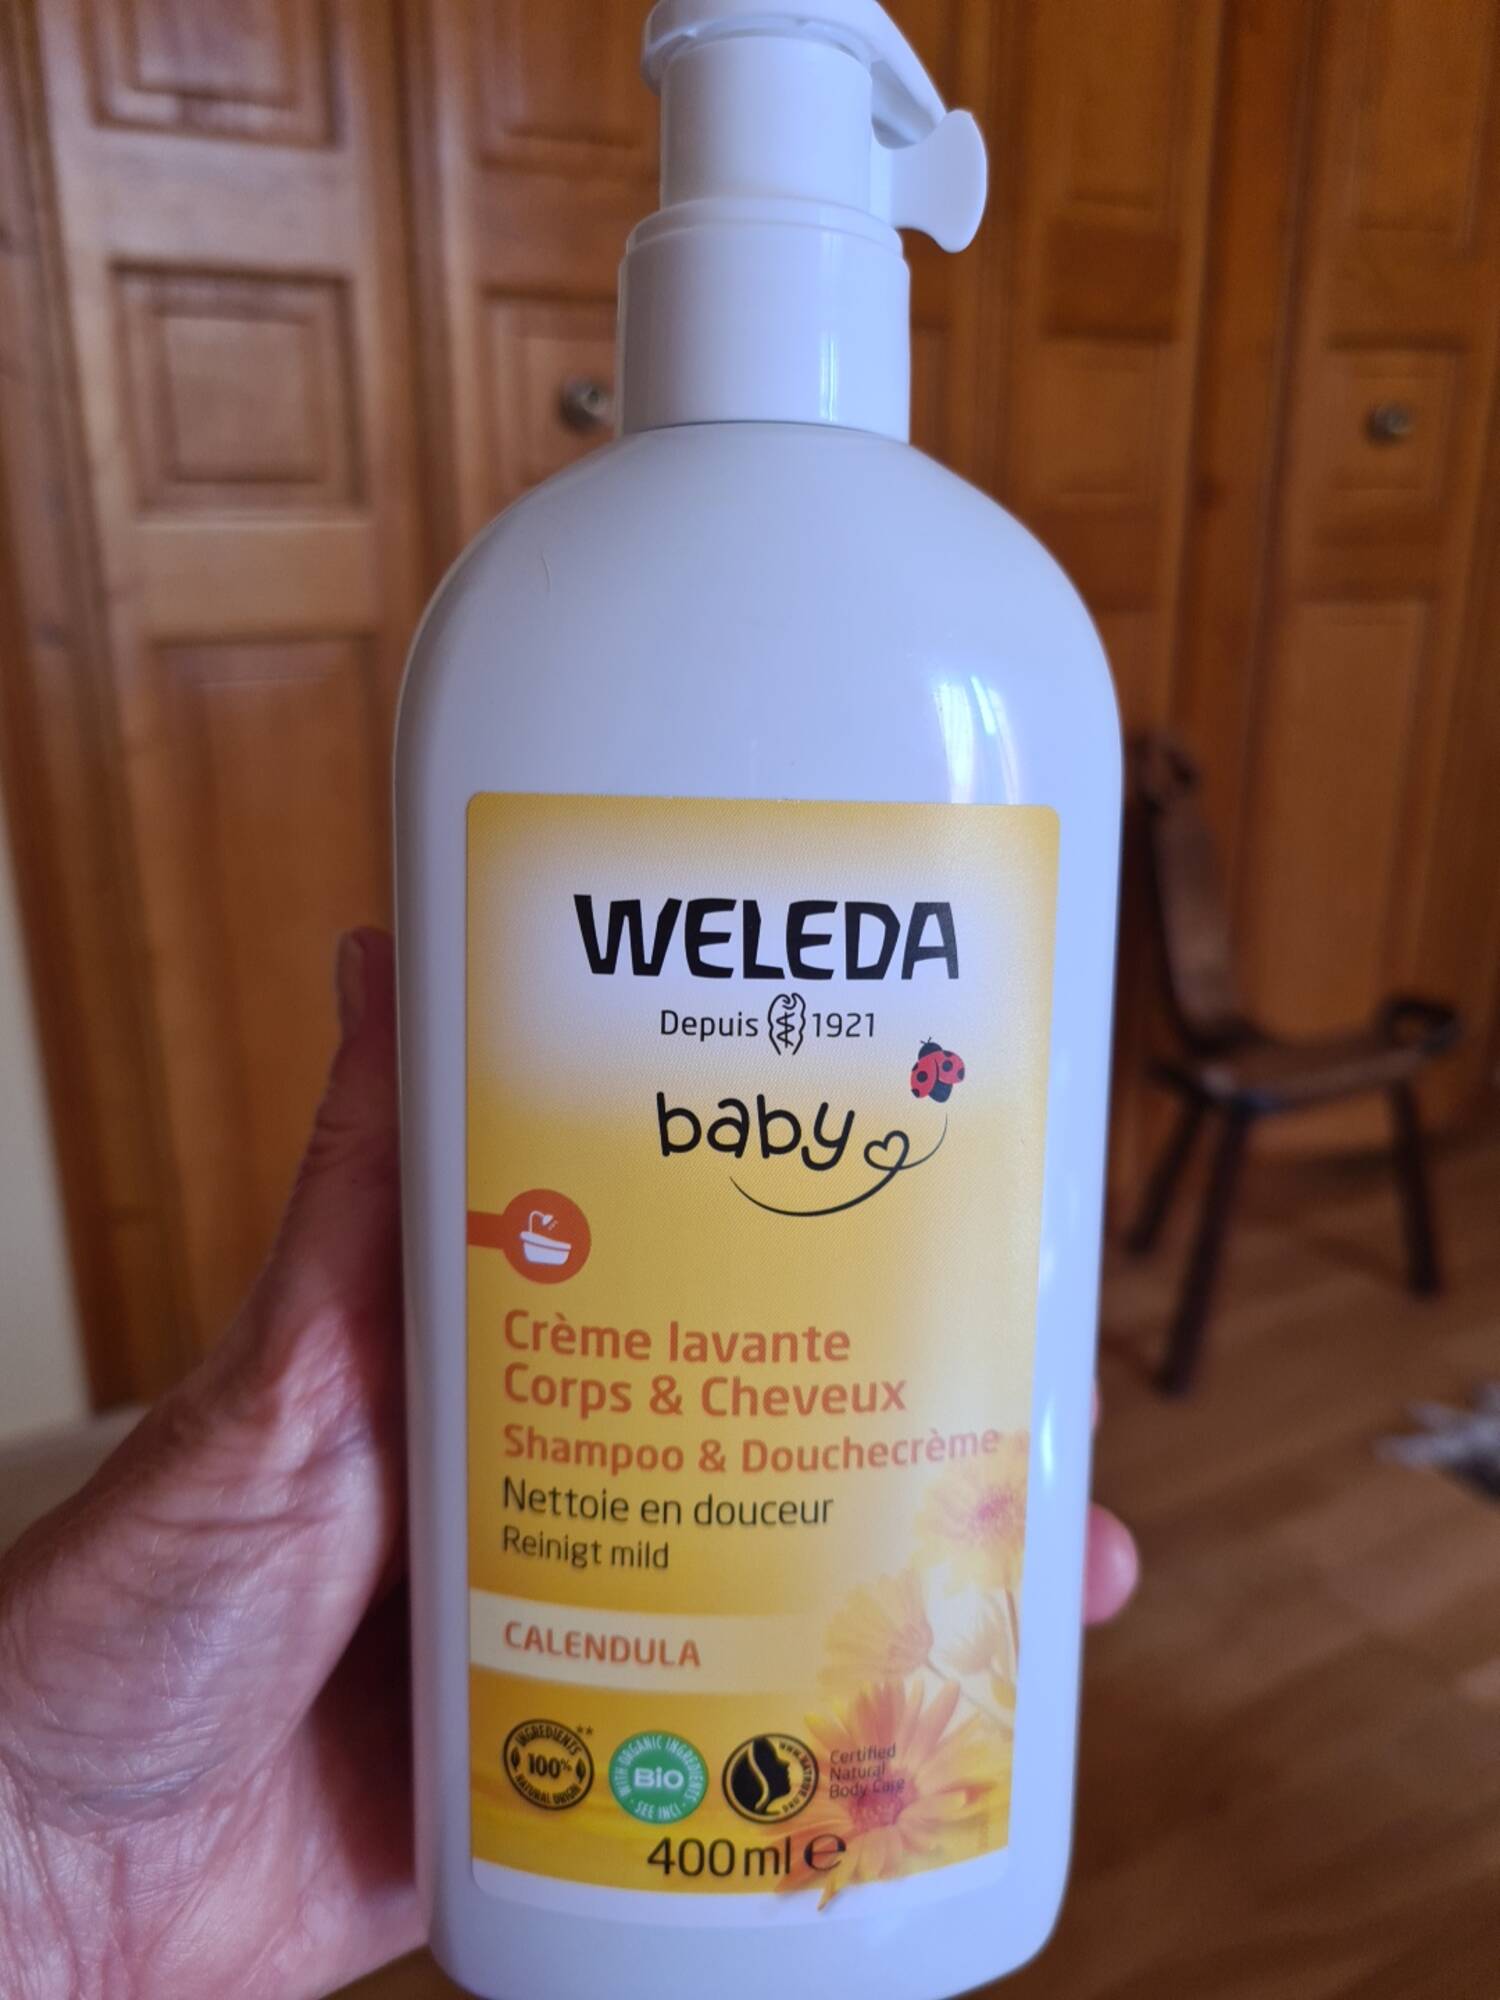 WELEDA - Calendula - Crème lavante